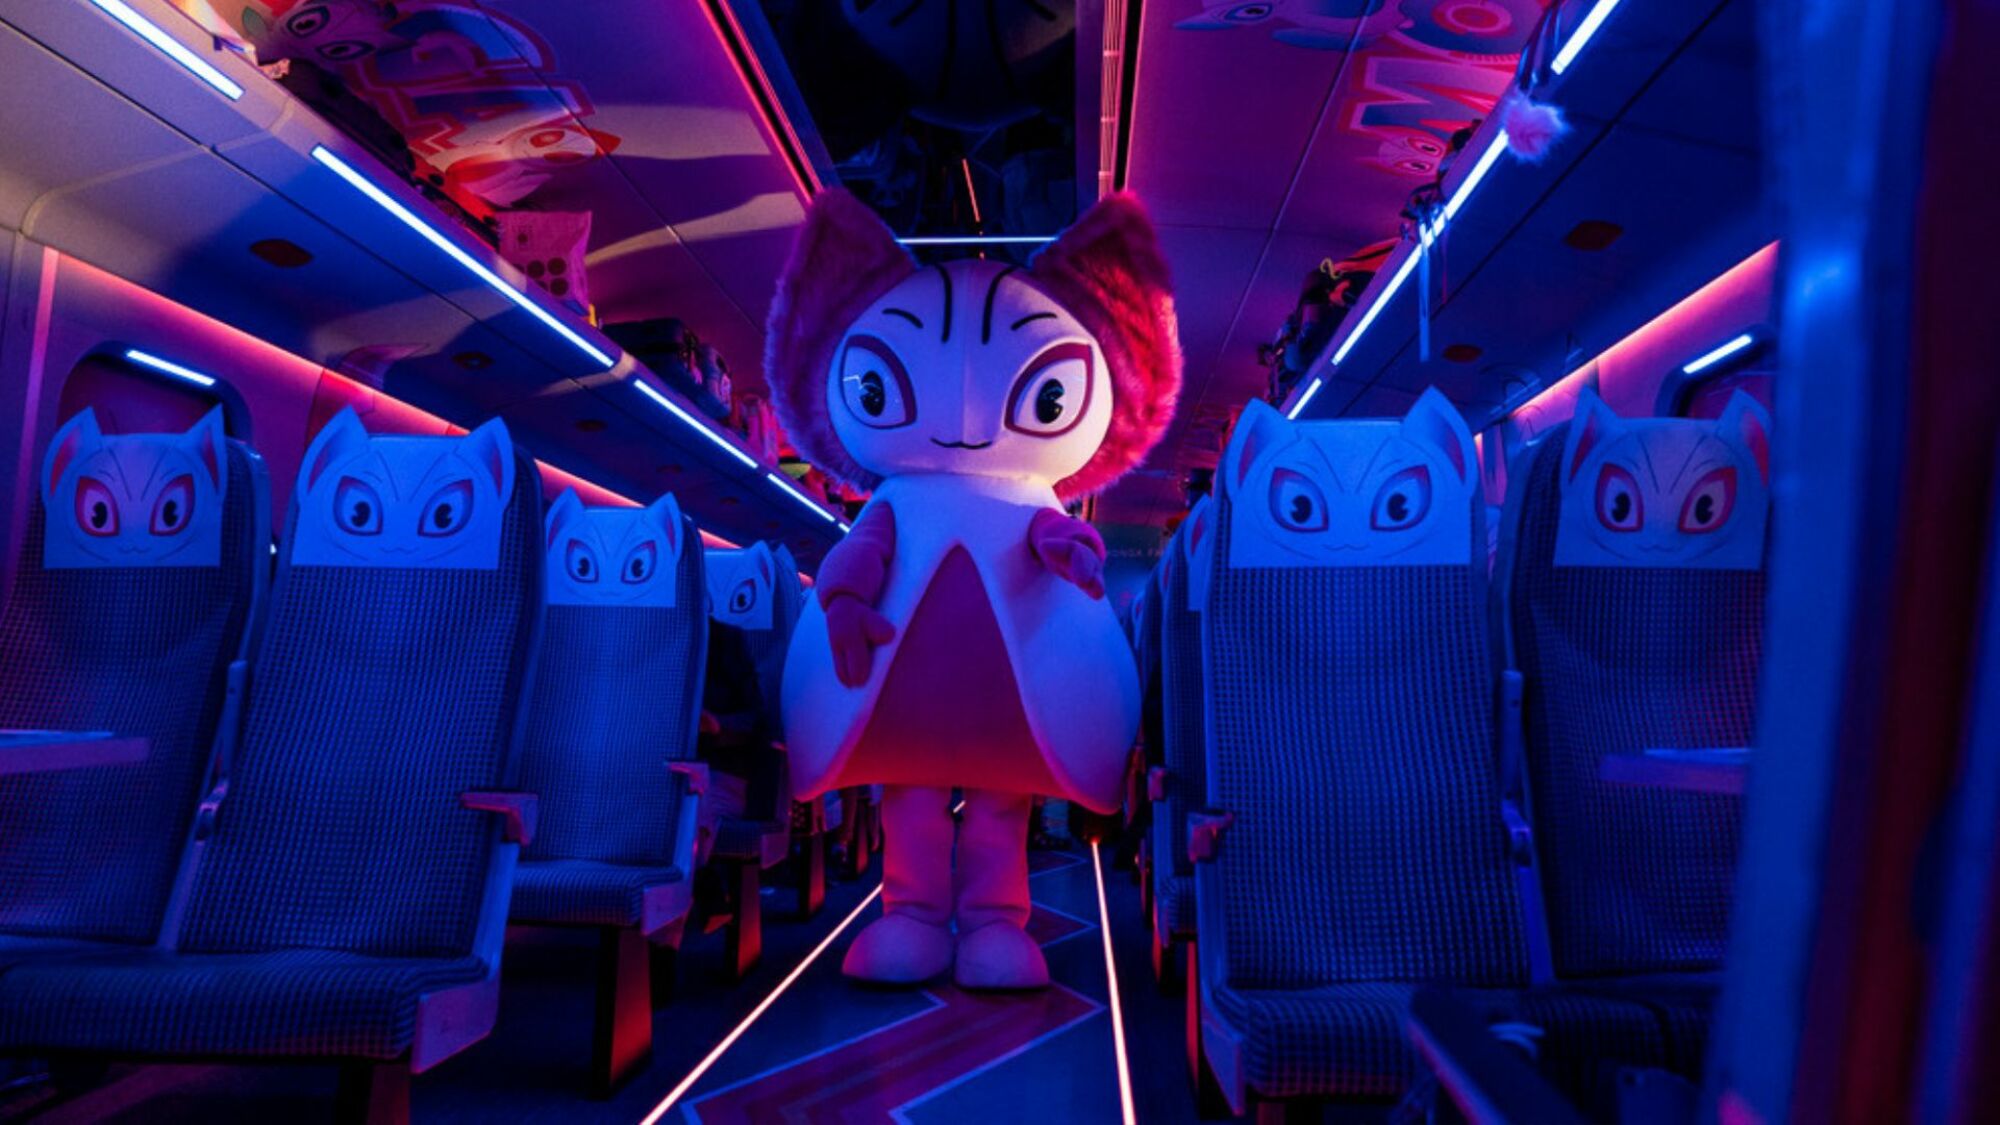 A anime figure costume stands on a train. 